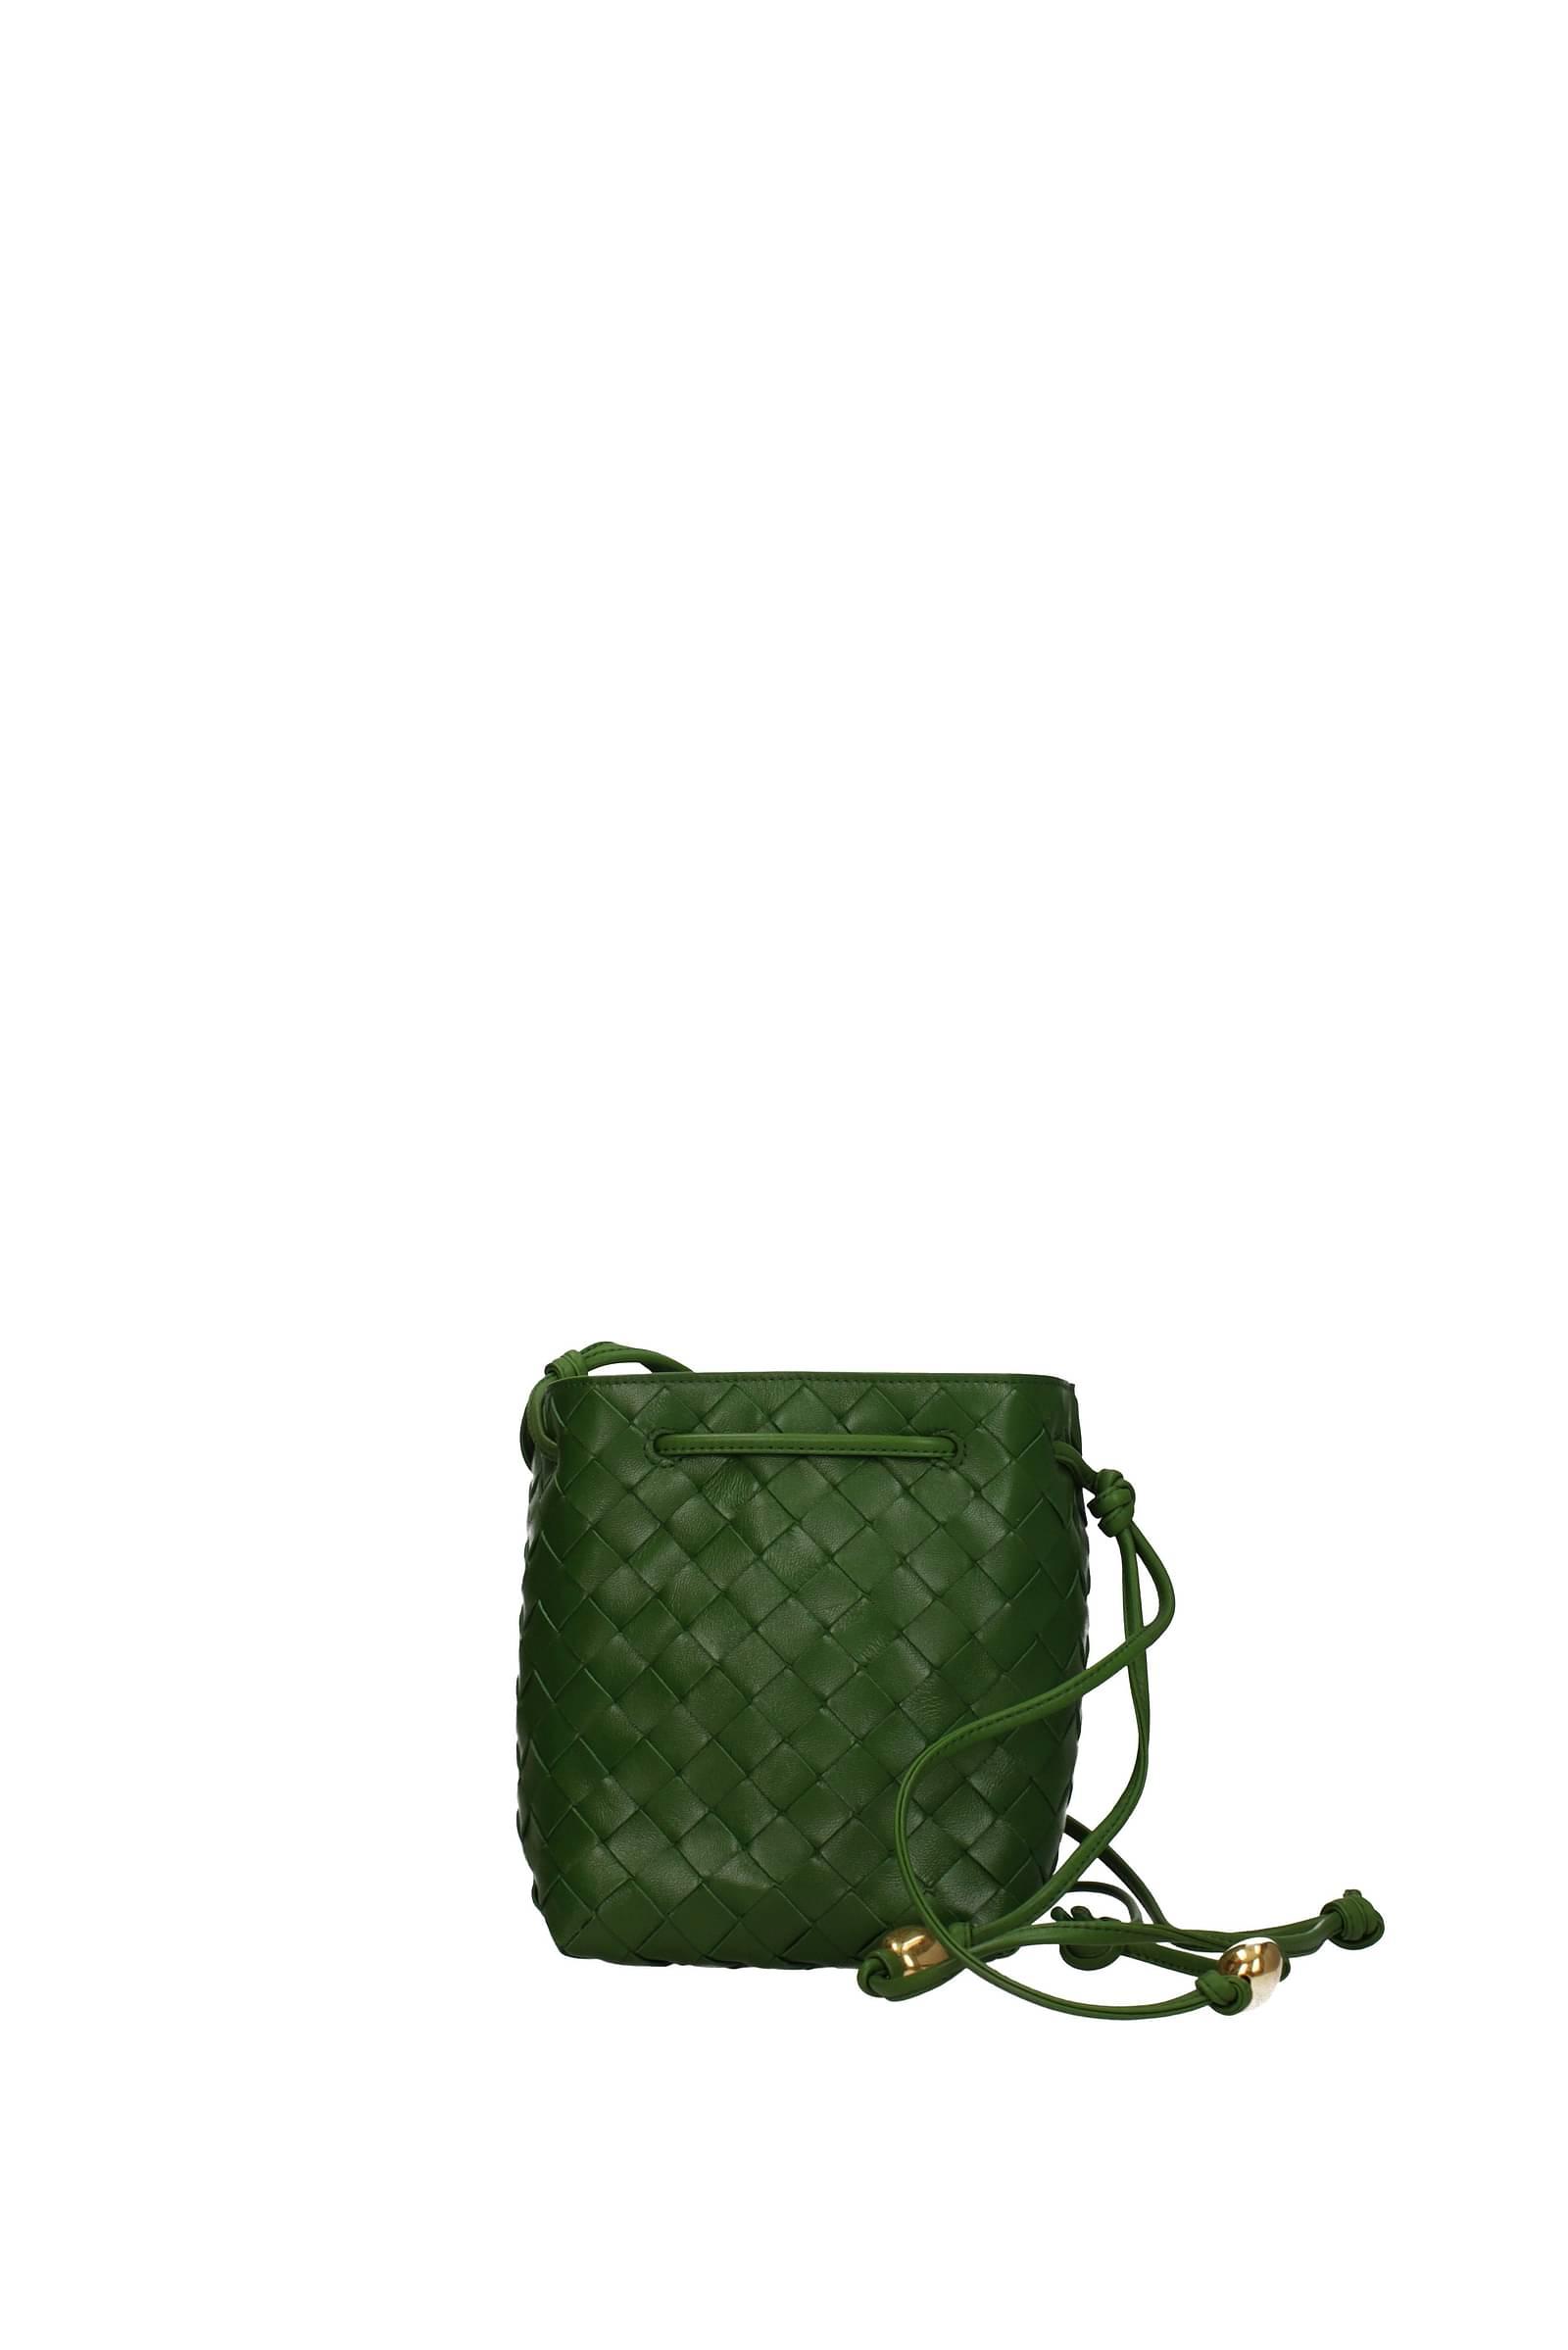 Bottega Veneta Grass Green Leather Small Loop Crossbody Bag In